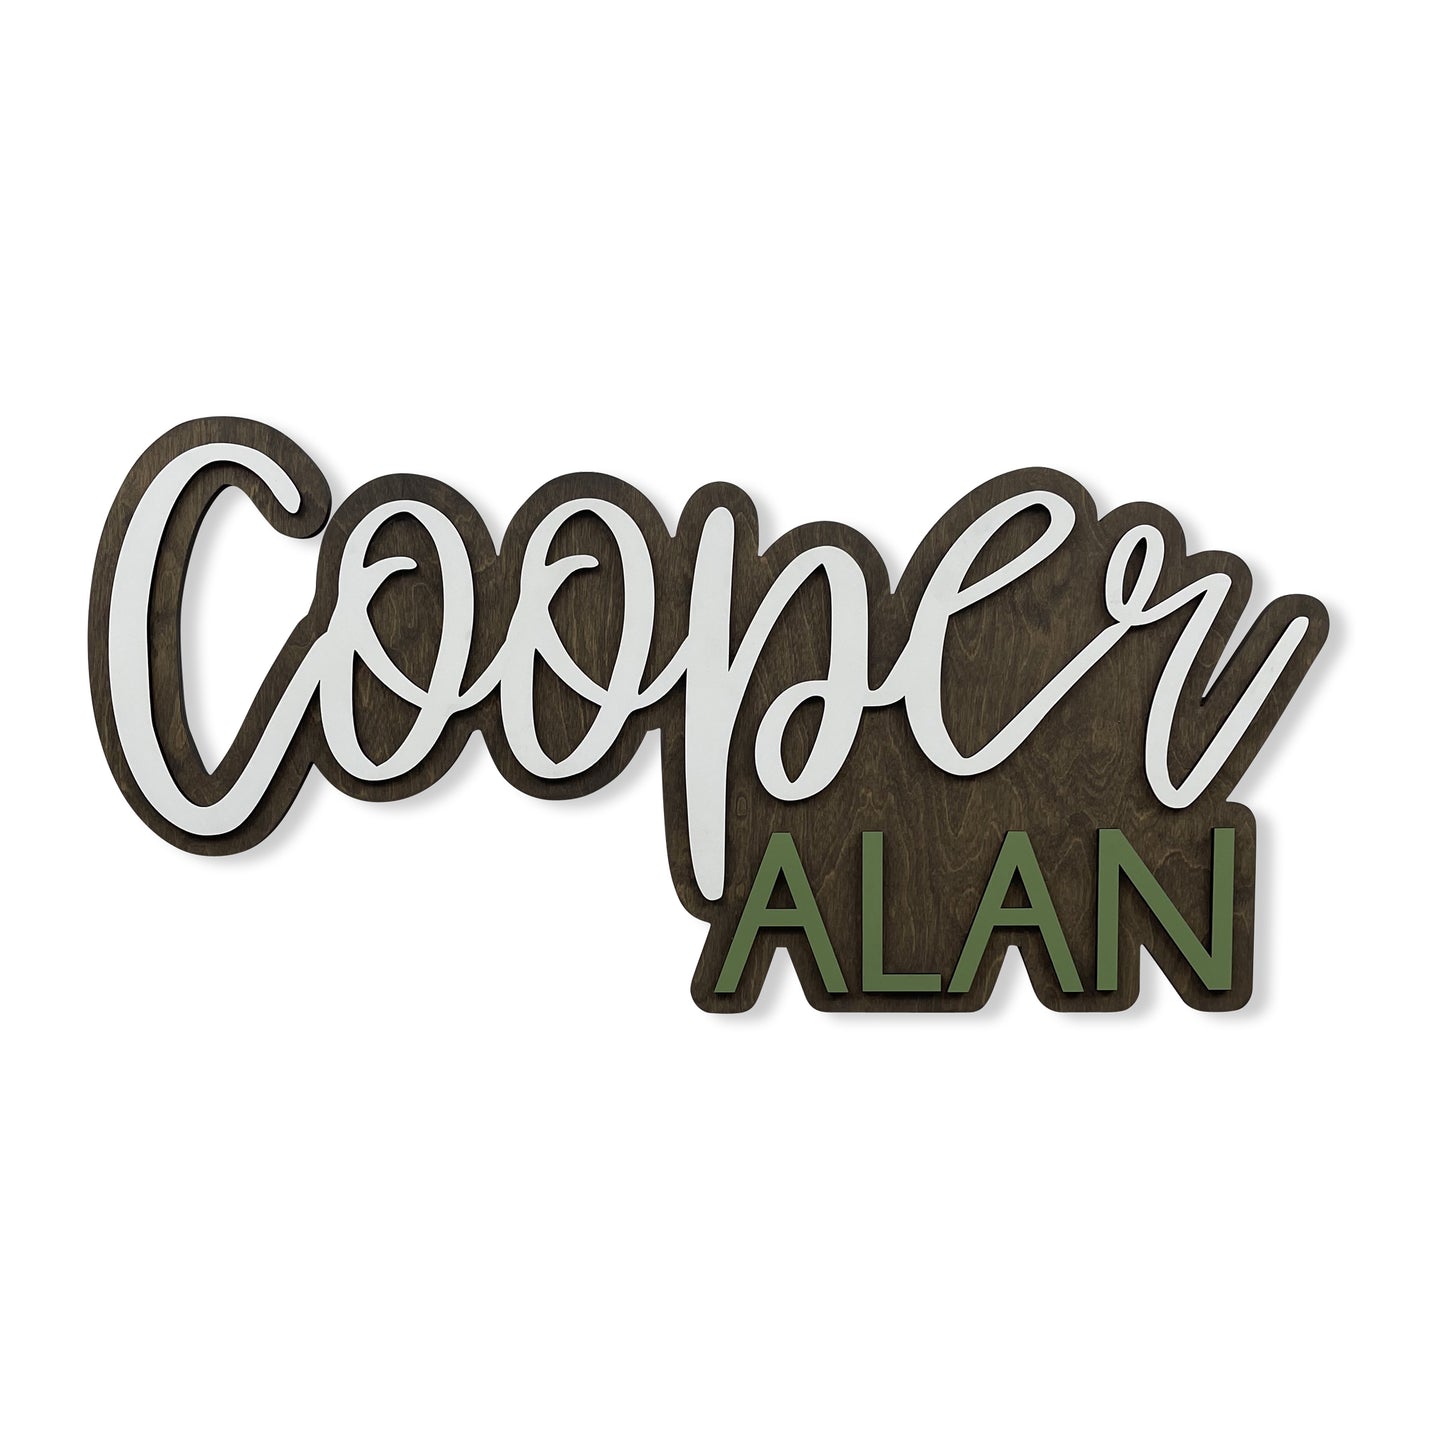 Cooper Alan Layered Sign